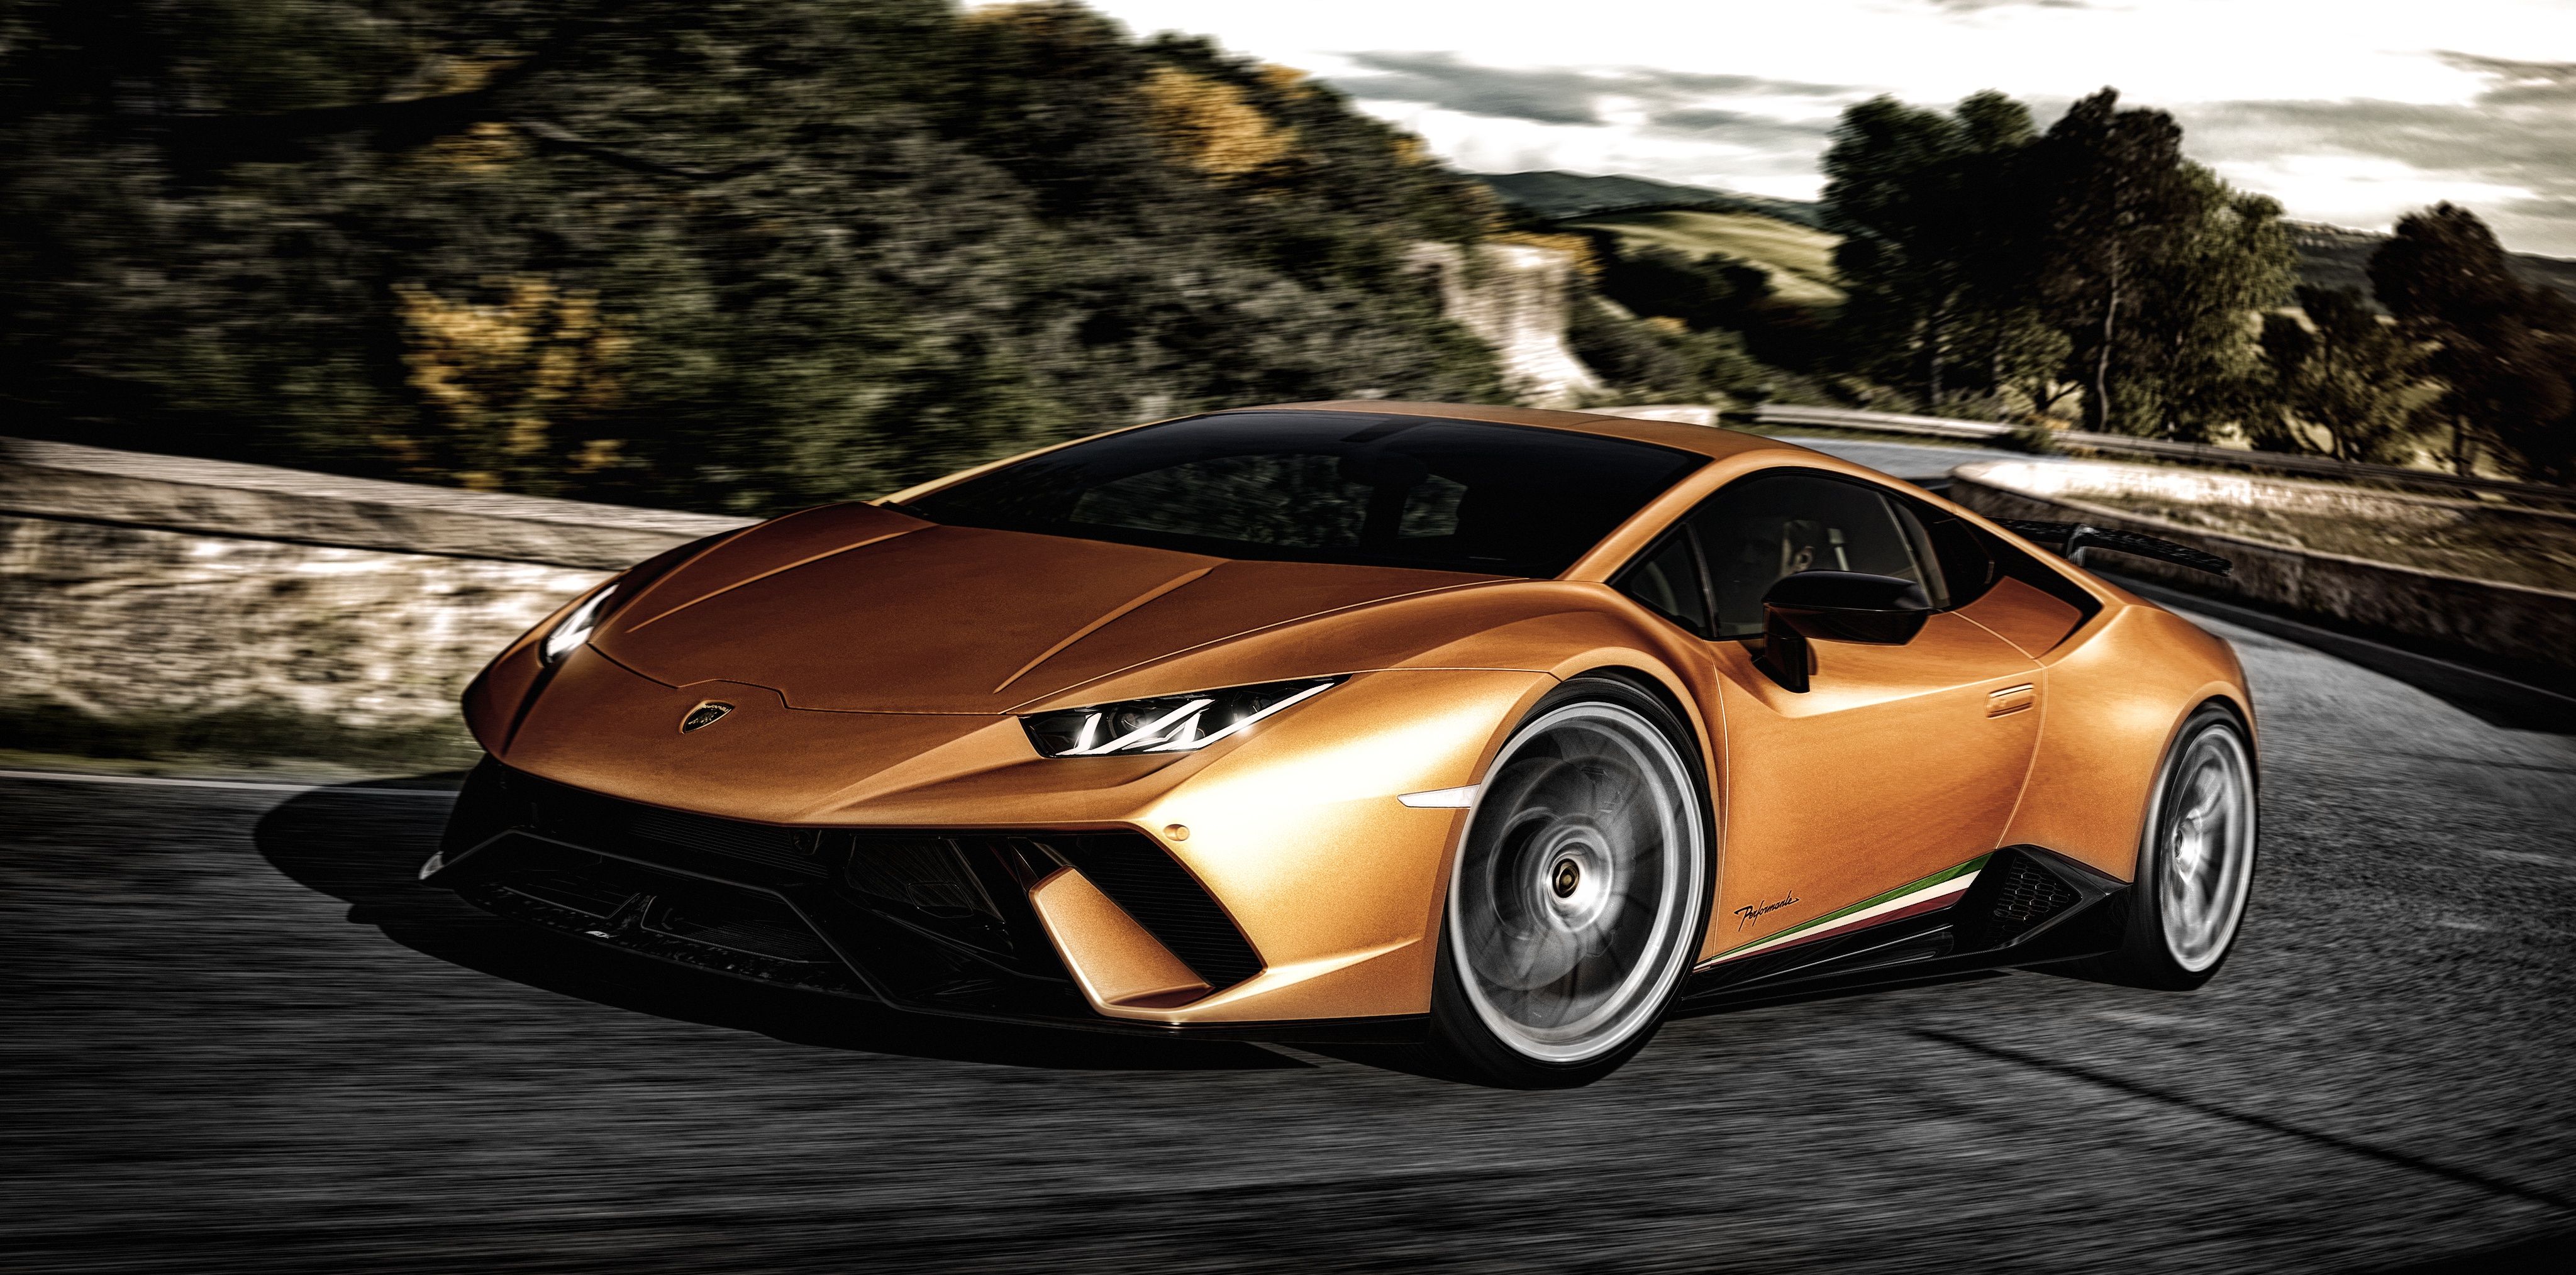 Baixe gratuitamente a imagem Lamborghini, Carro, Super Carro, Veículos, Carro Laranja, Lamborghini Huracán Performance na área de trabalho do seu PC